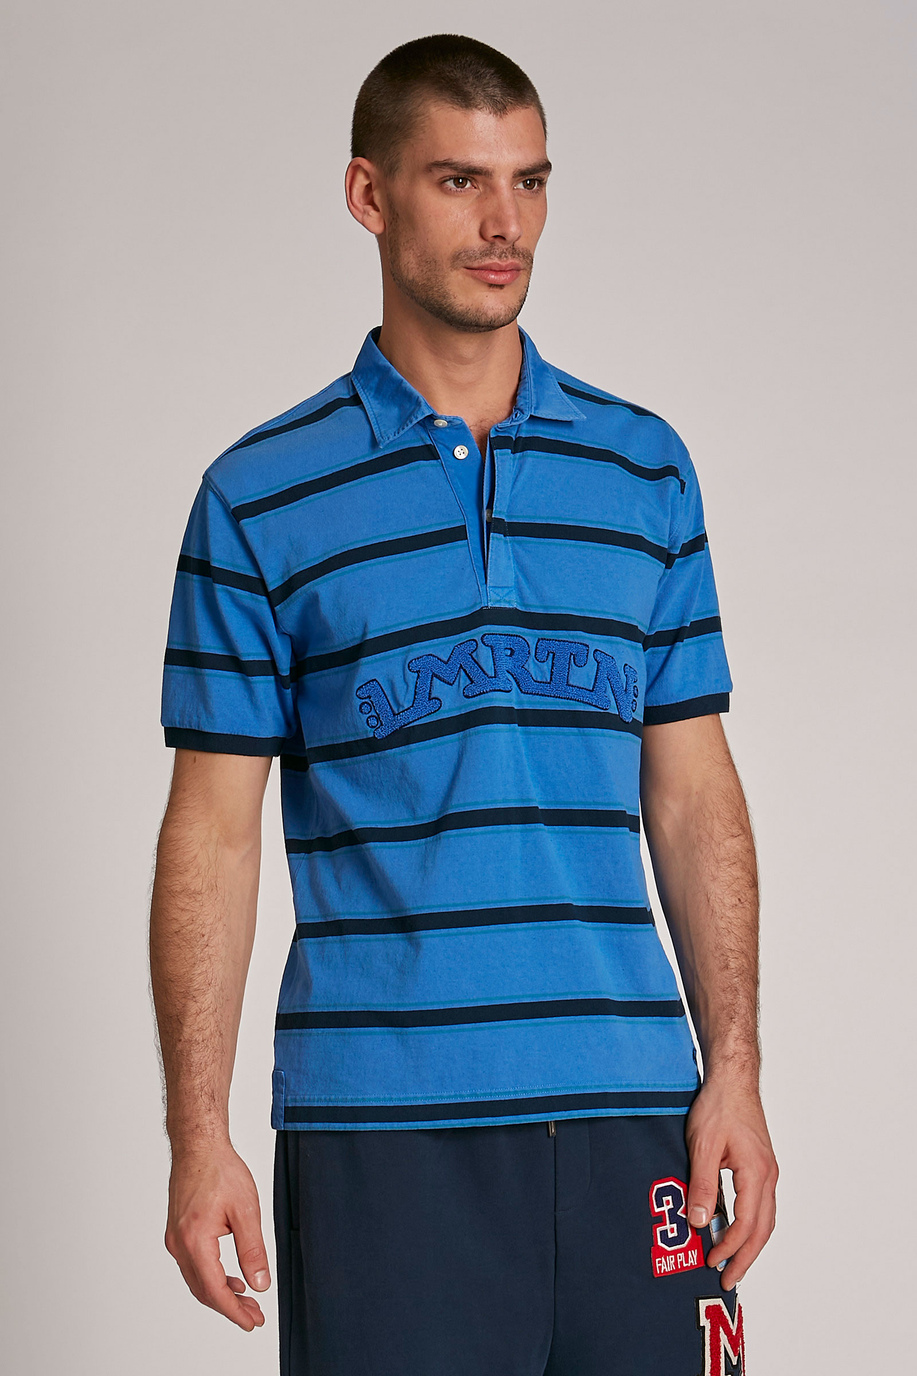 Herren-Poloshirt mit kurzem Arm aus 100 % Baumwolle, oversized Modell - Poloshirts | La Martina - Official Online Shop